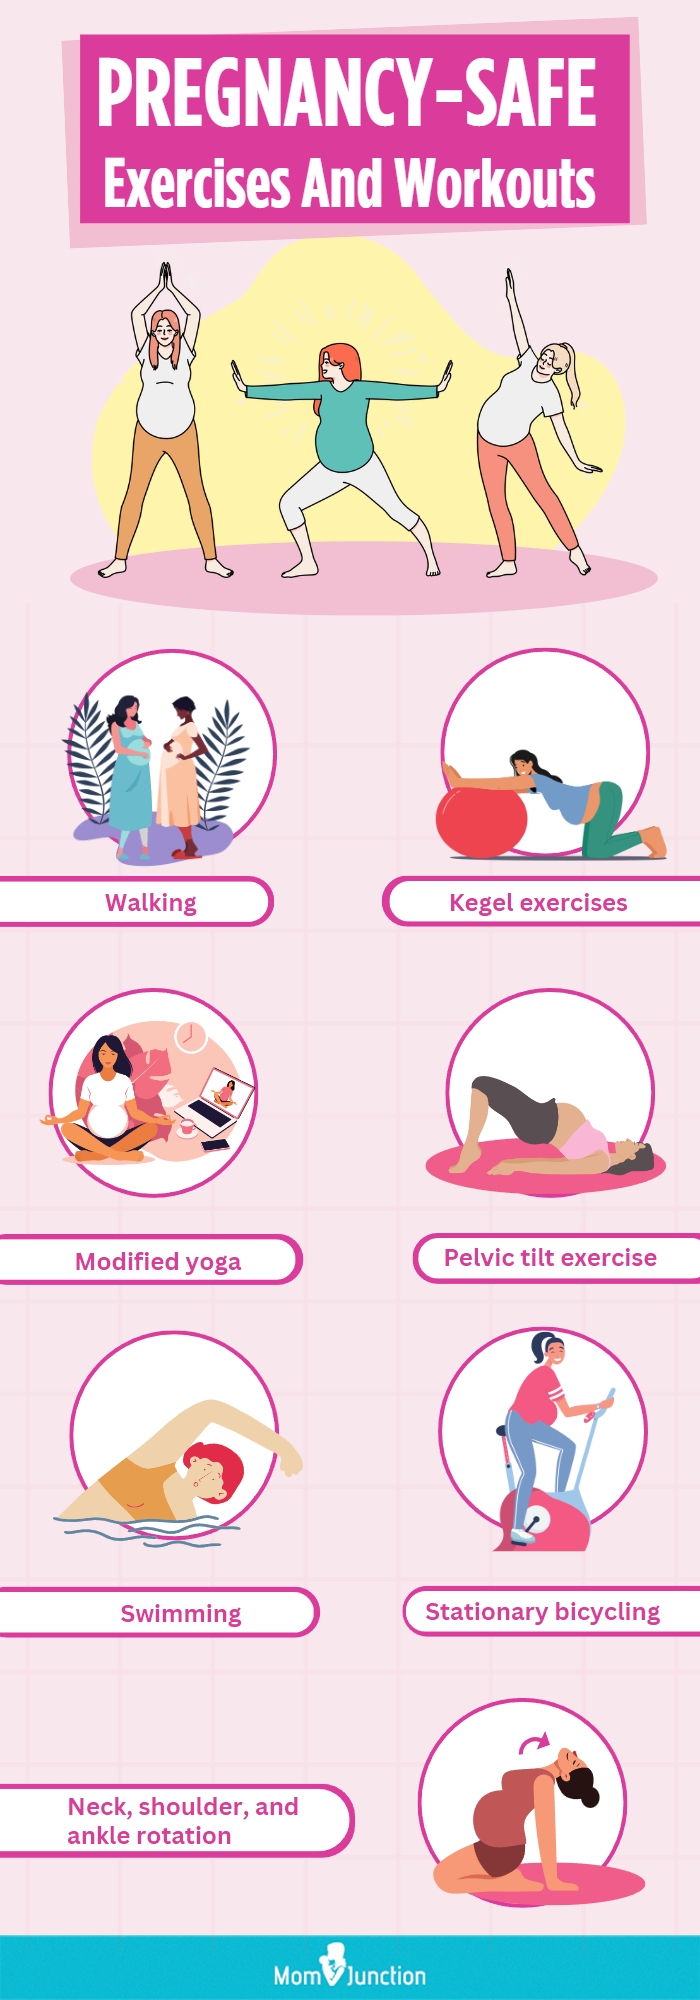 10 Safe Pregnancy Exercises By Trimester